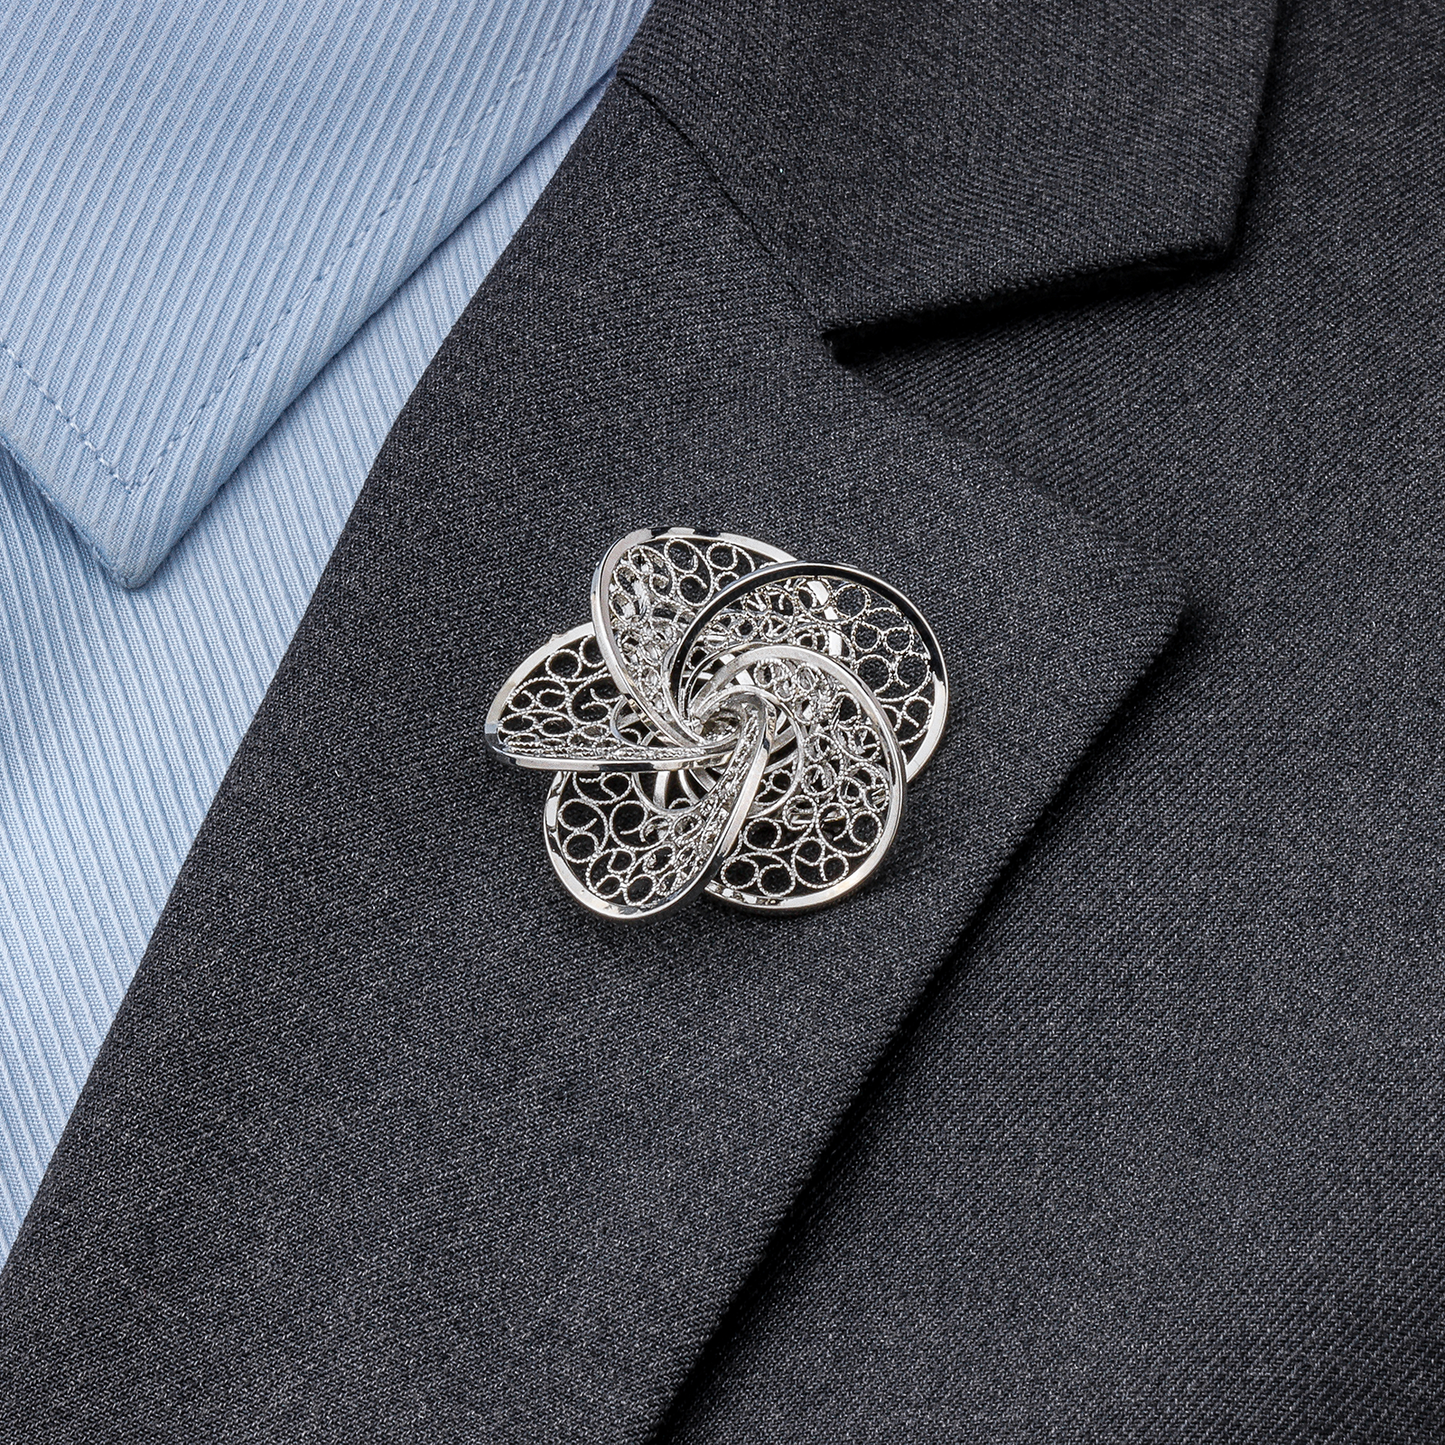 HAWSON Metal Knot Flower Lapel Pin for Men.